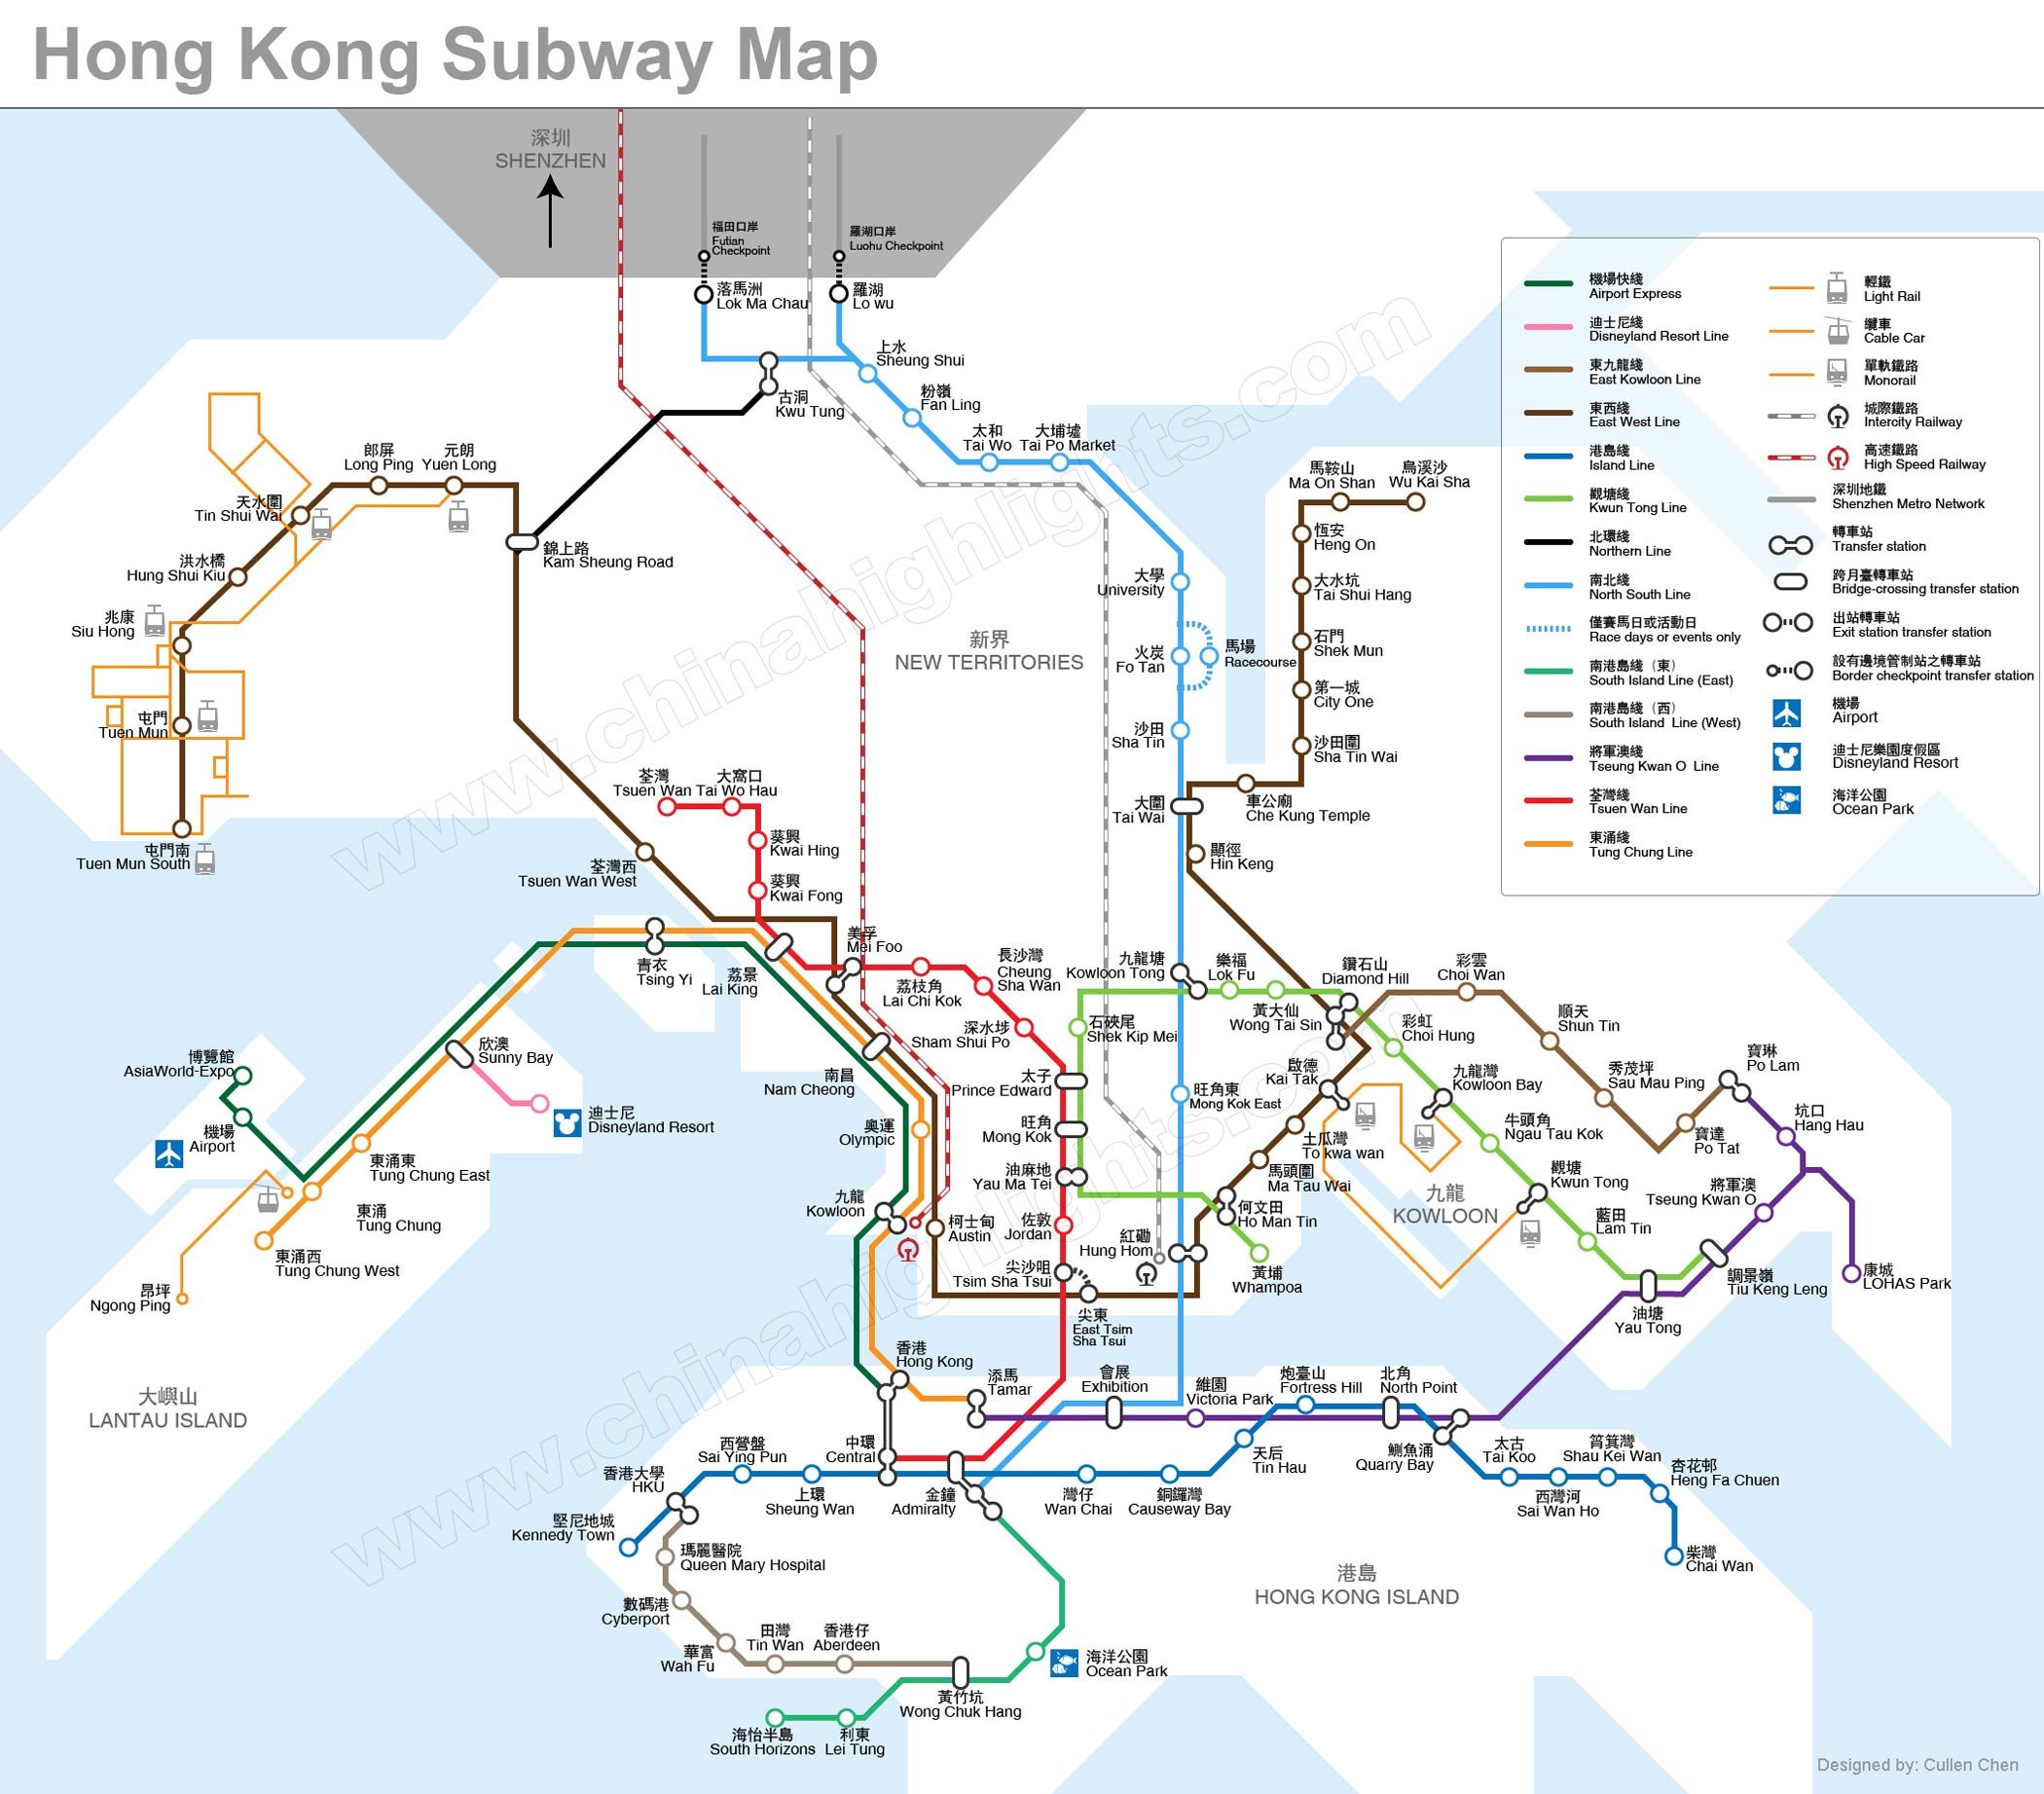 Hong Kong's Subway (MTR): Your Expert Guide